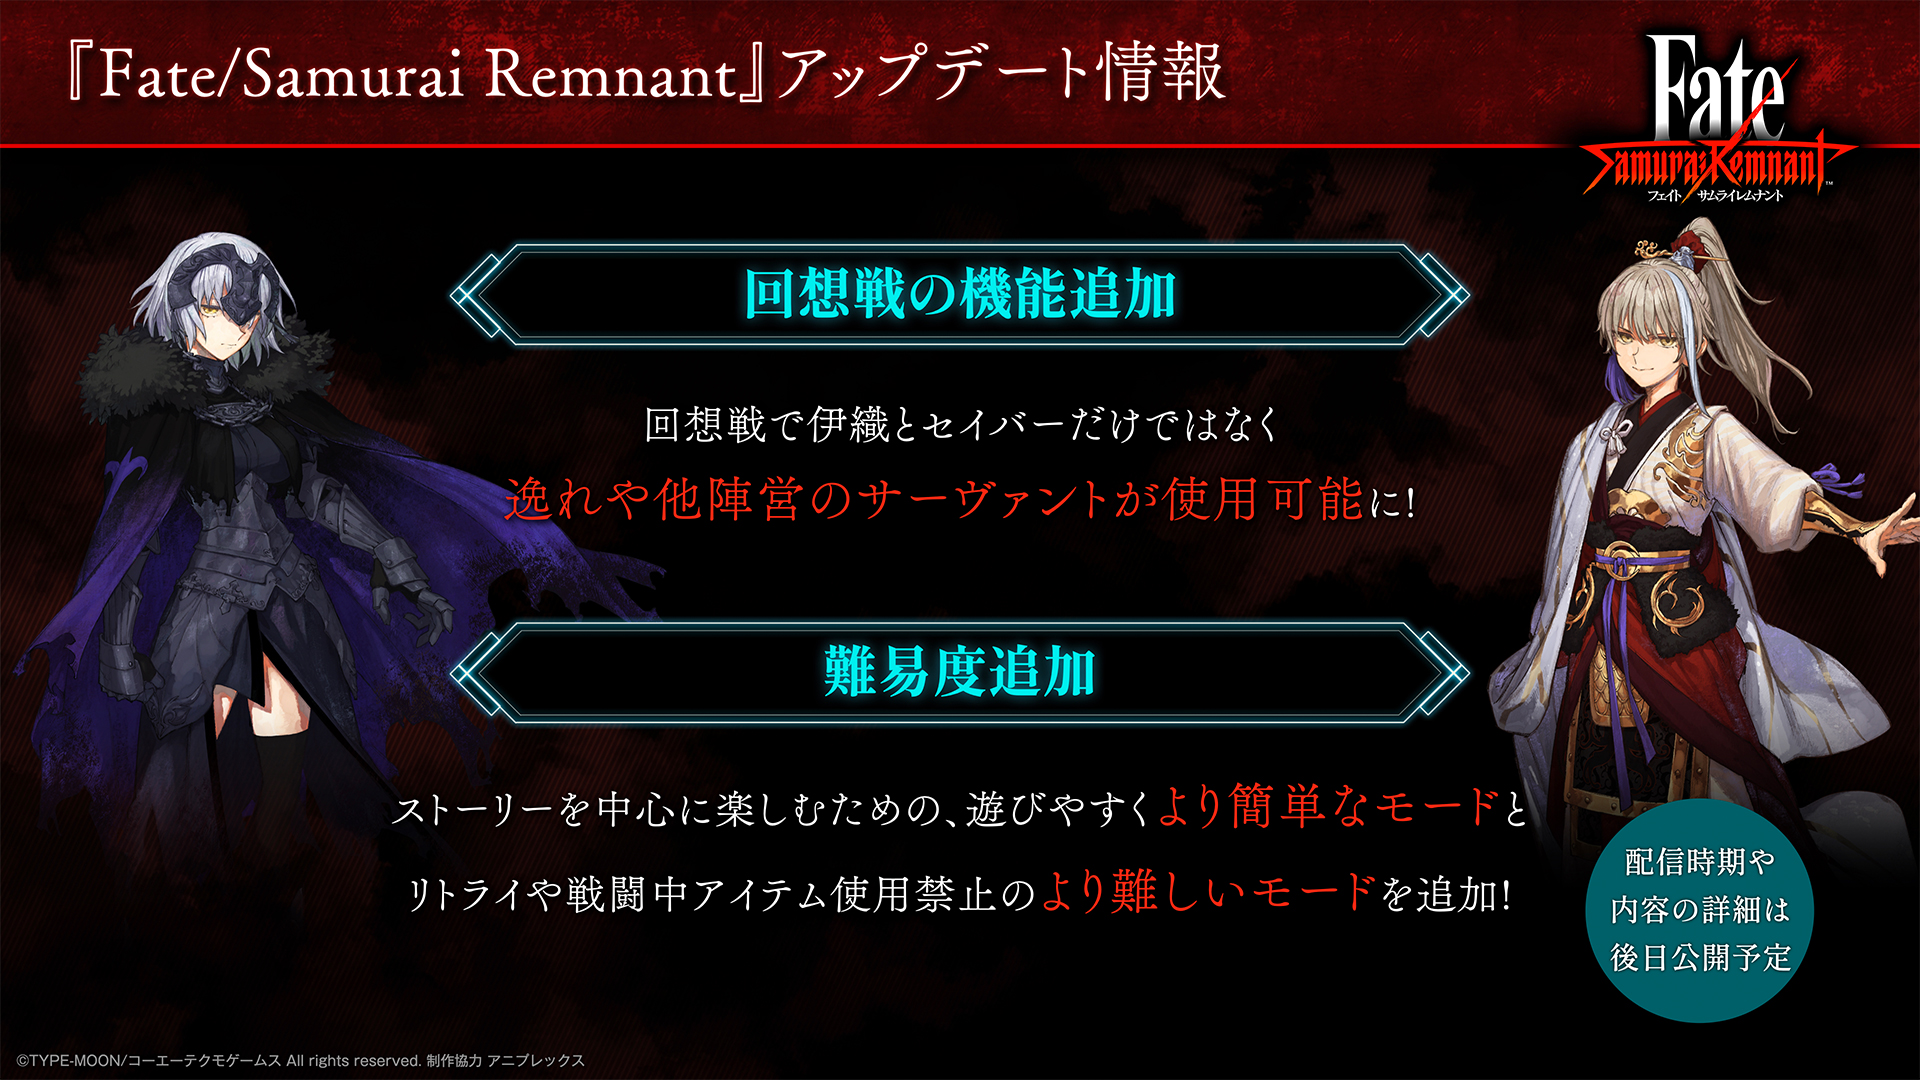 《Fate/Samurai Remnant》将加入更多难度选择及BOSS战模式